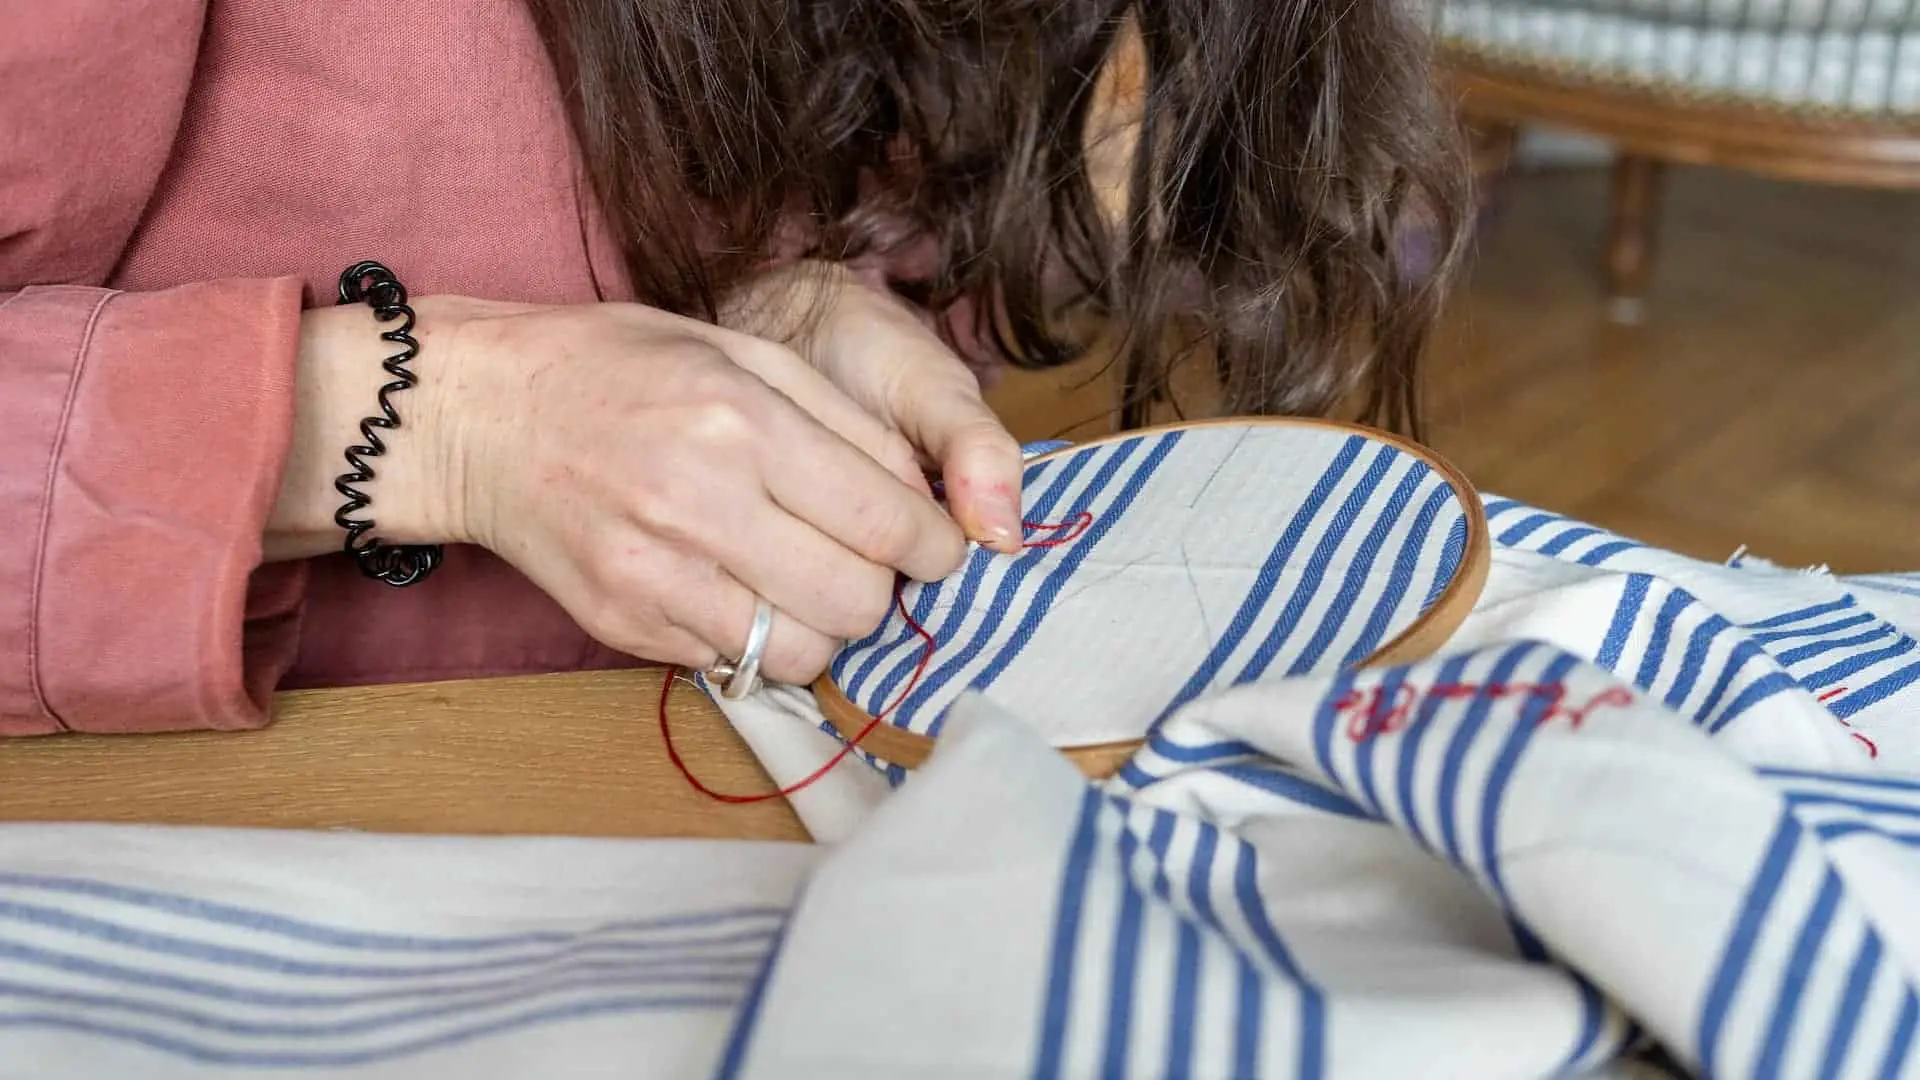 Person hand stitching